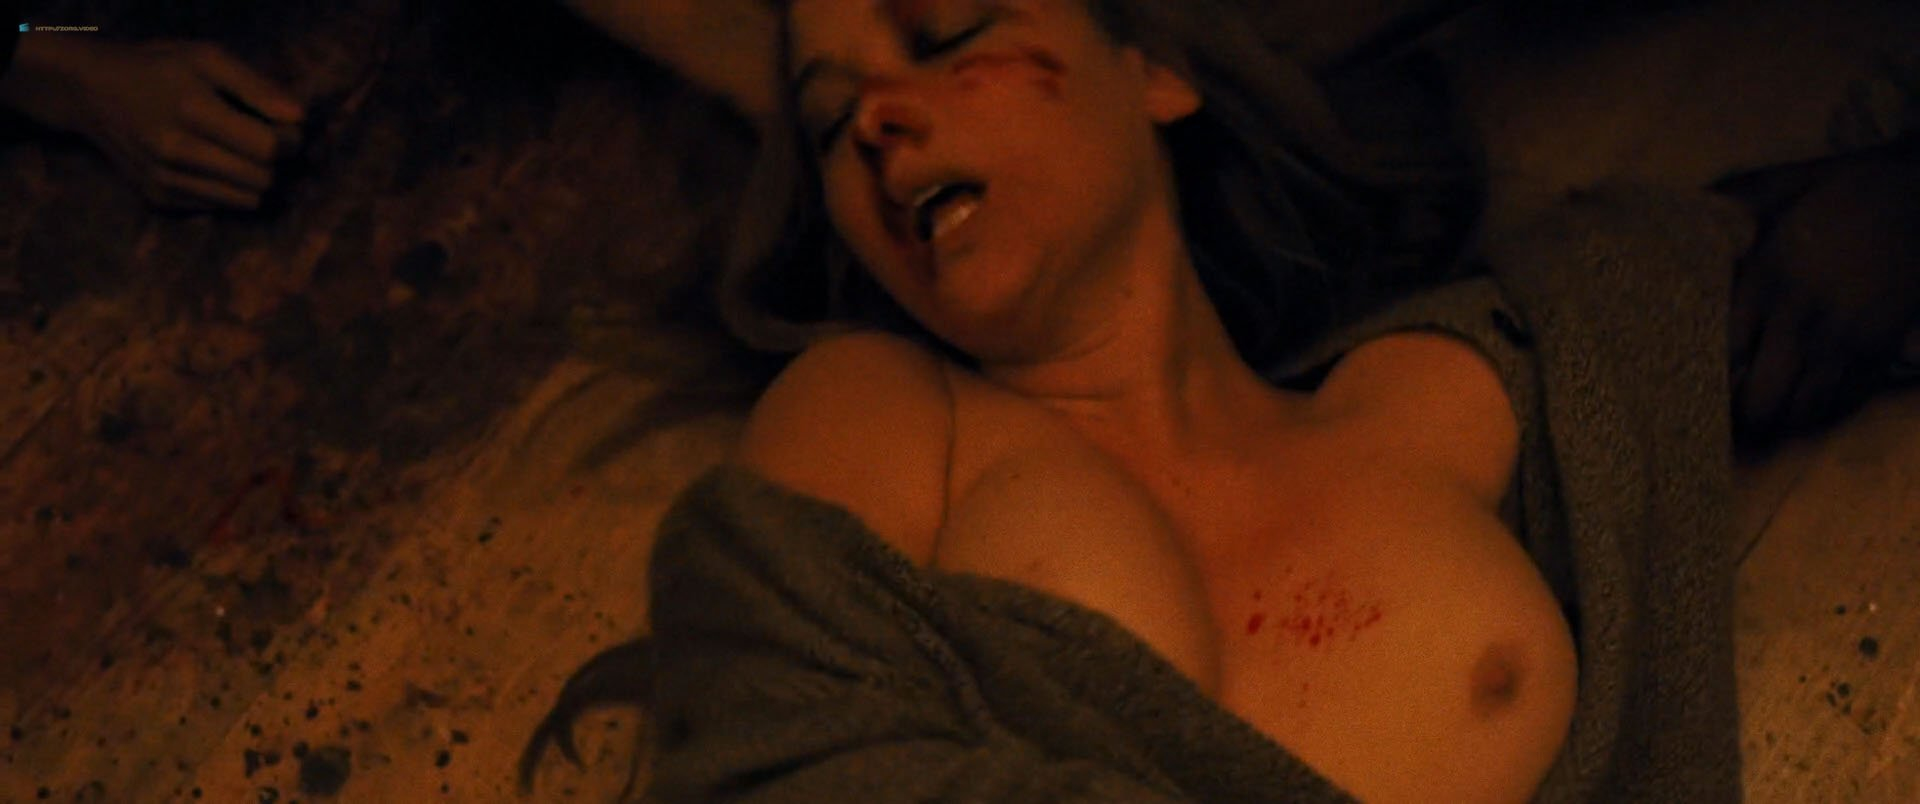 Jennifer lawerence nude scene